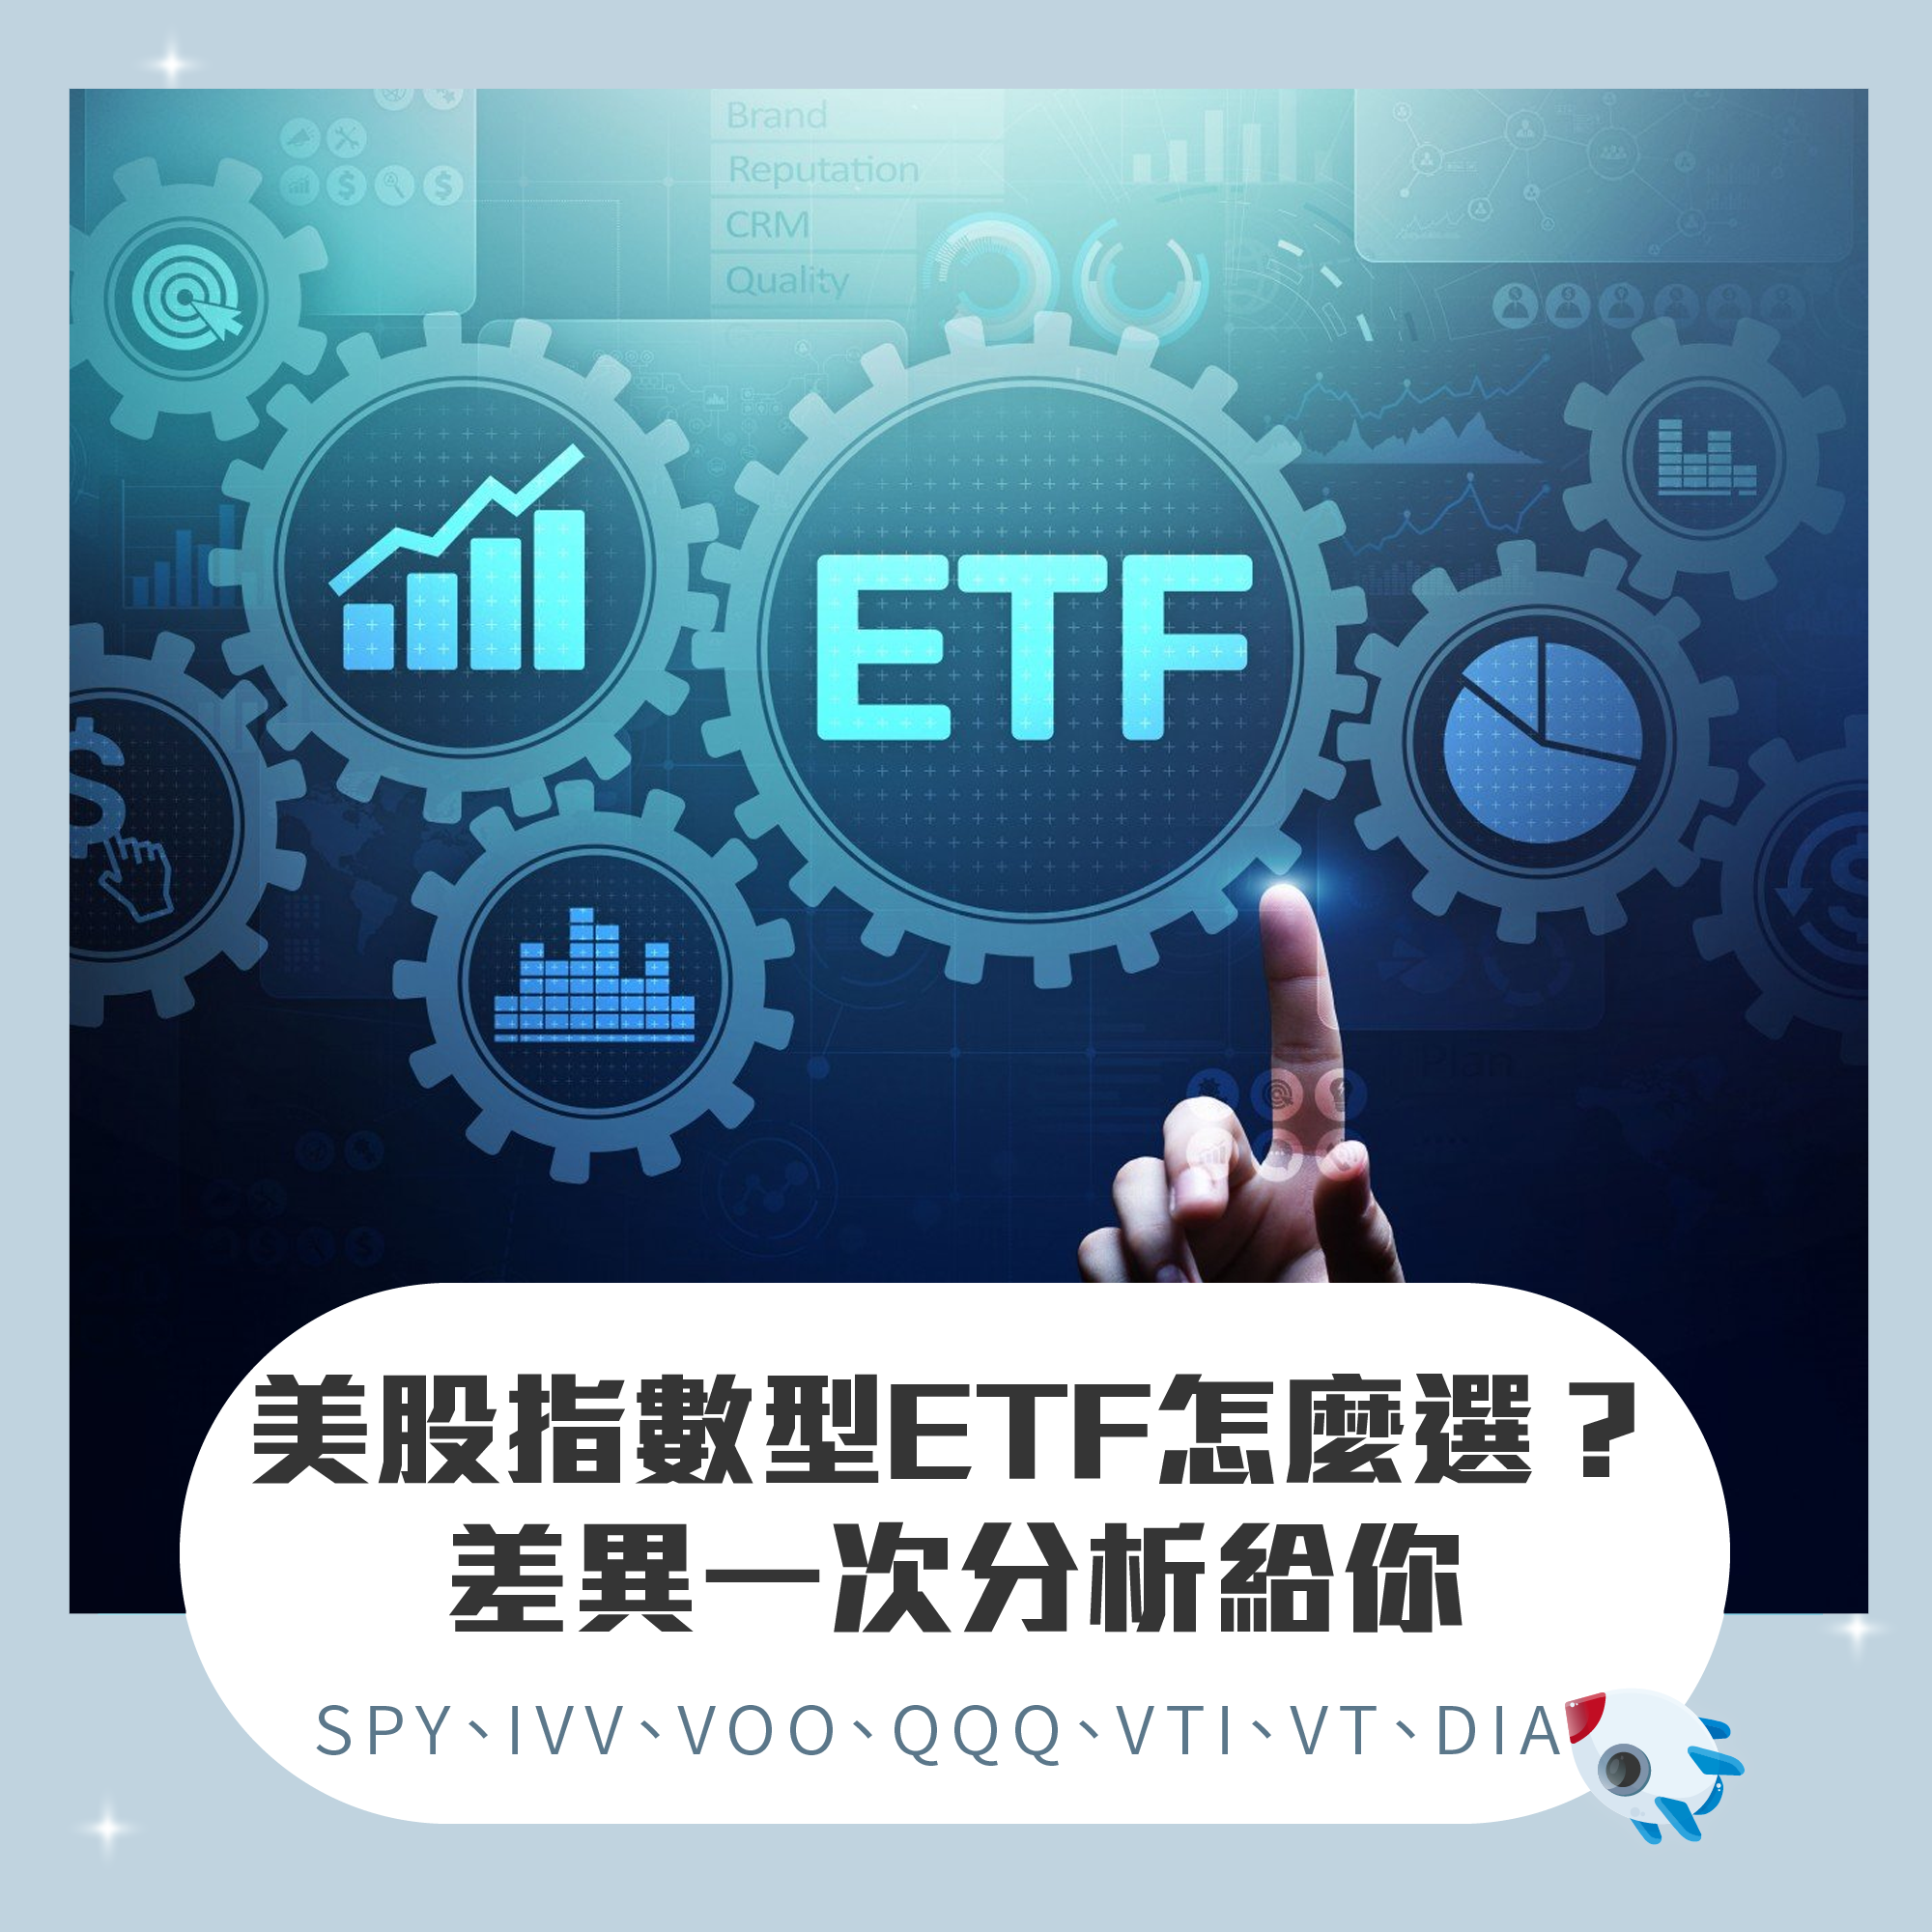 VTI vs. QQQ  Which is the Better Investment? — HaiKhuu Trading